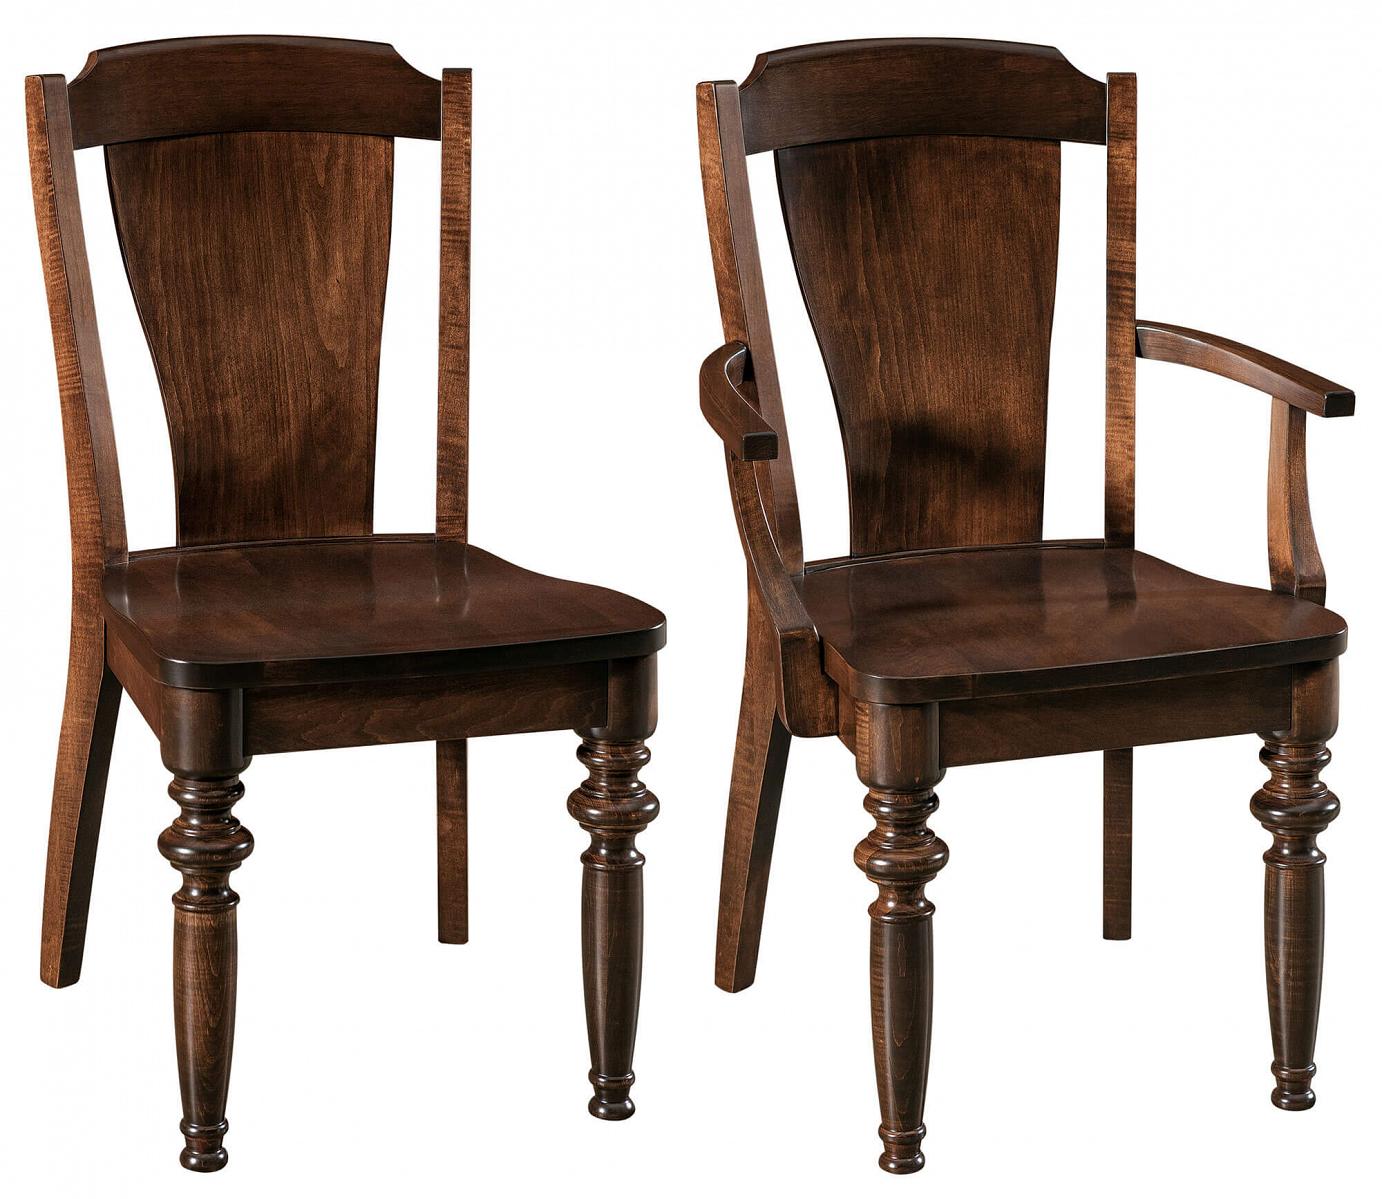 RH Yoder Cumberland Chairs